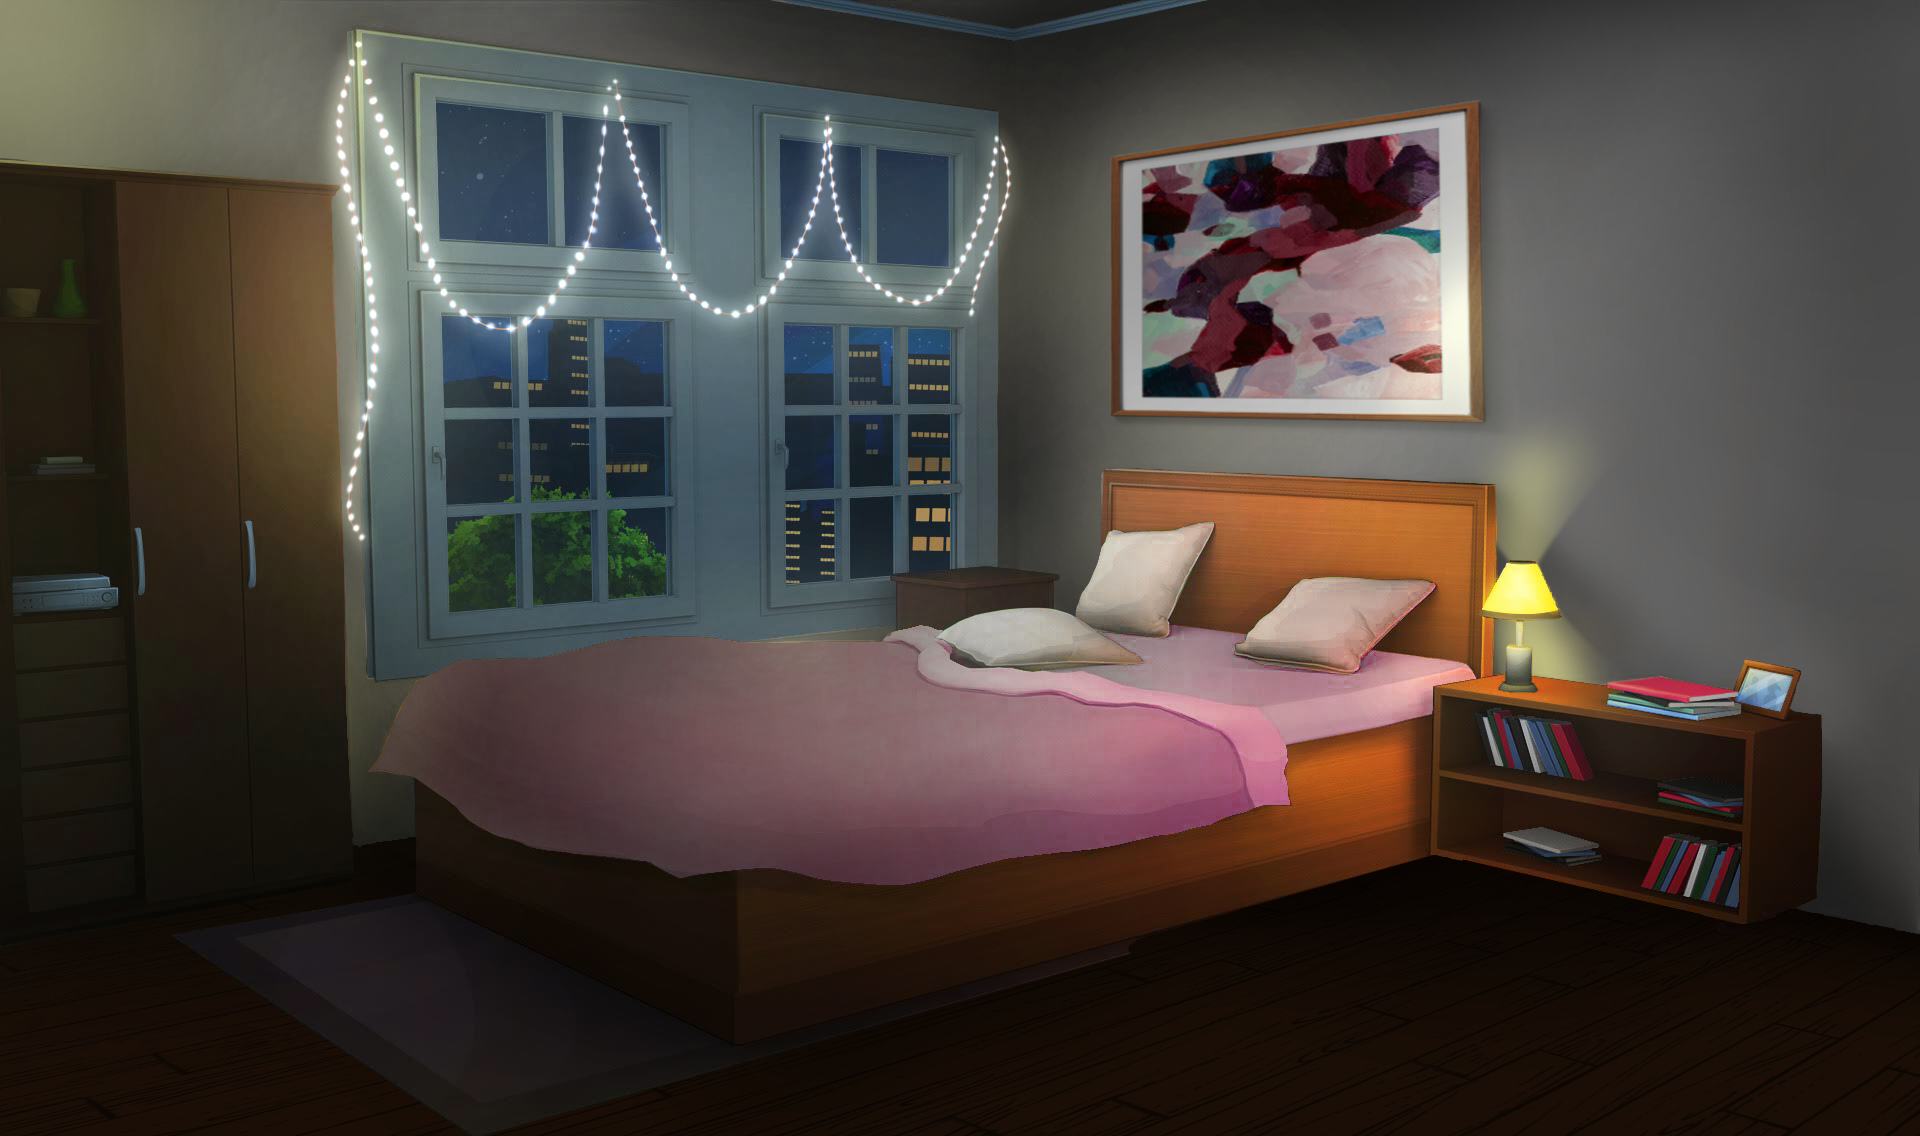 Anime Pink Bedroom Wallpapers - Wallpaper Cave